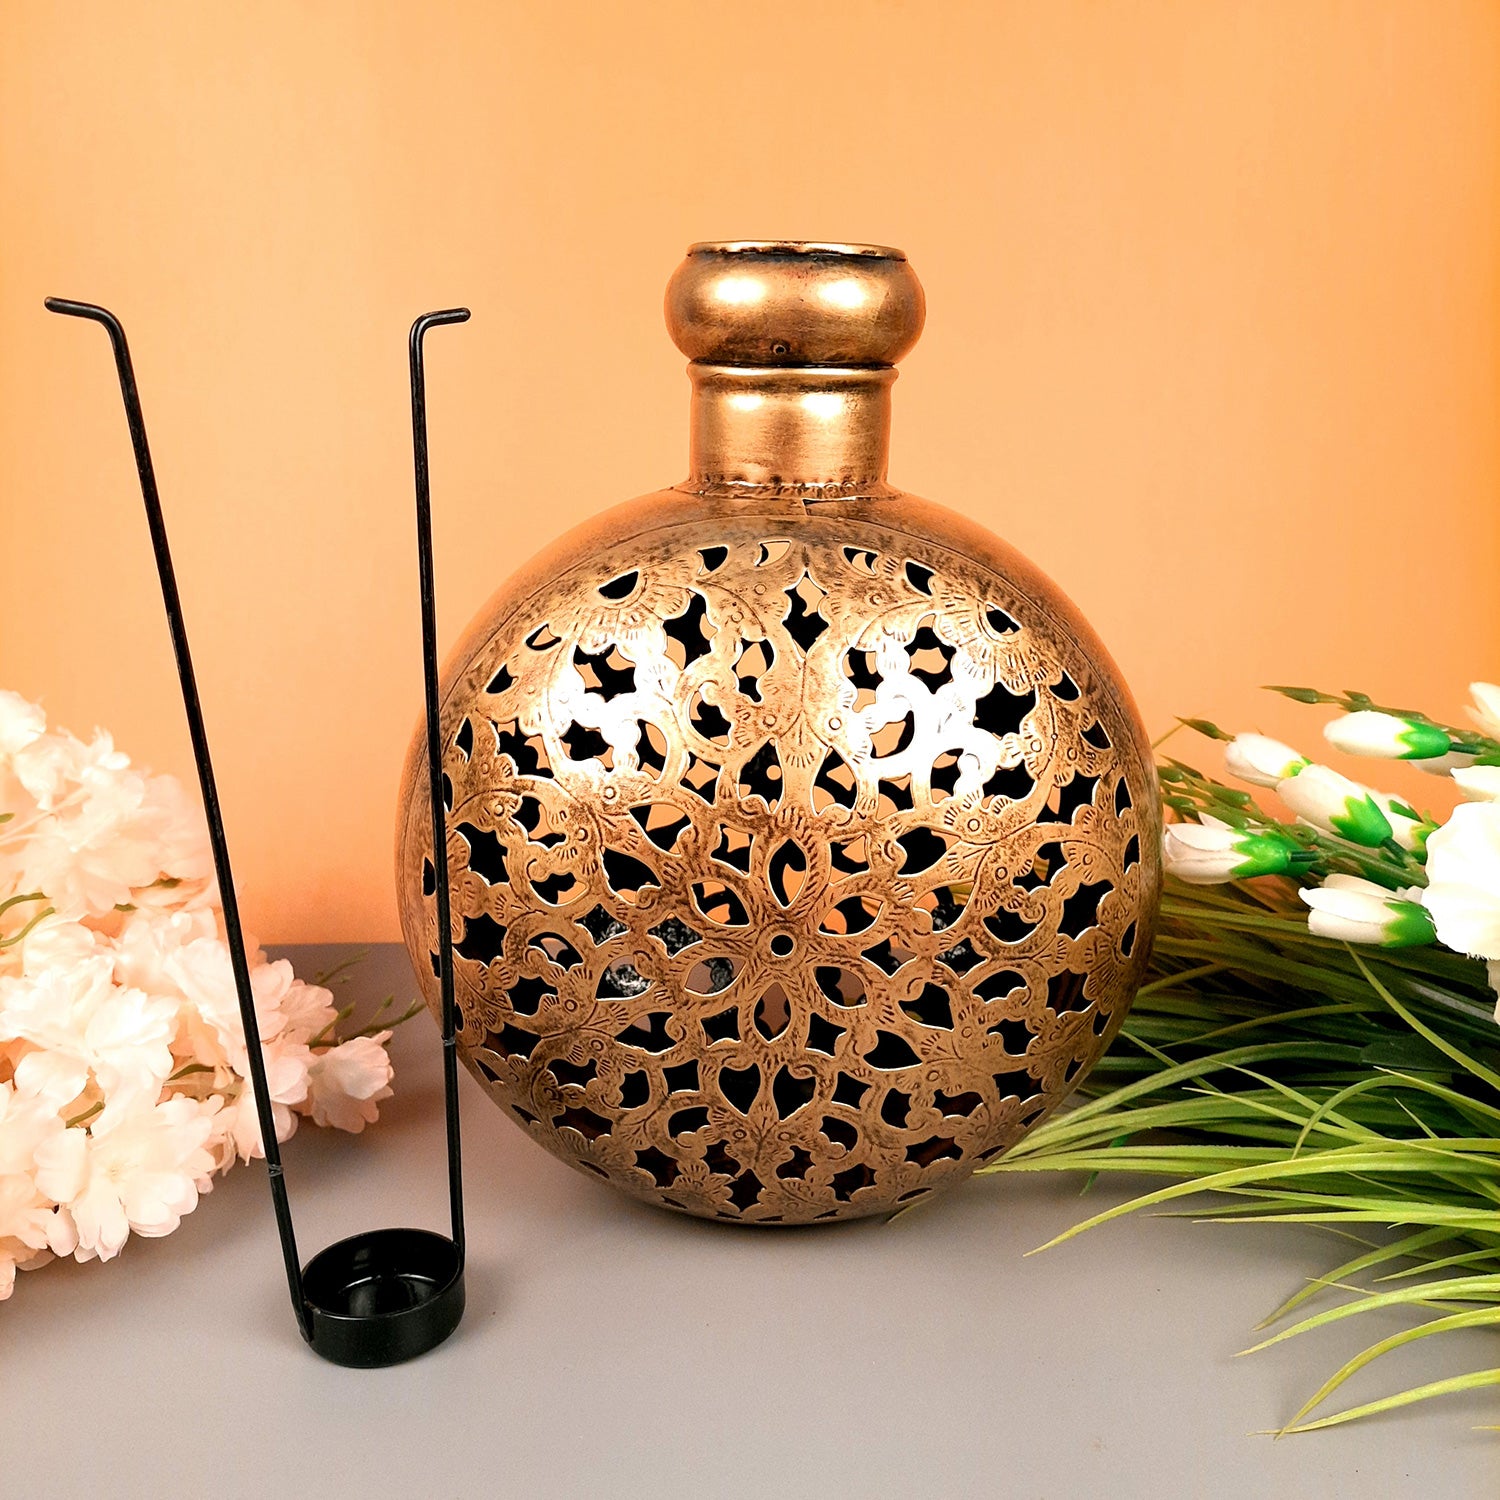 Vase Cum Tea Light Holder With Detachable T Light Stand - Pitcher Design | Tealight Stand - For Living Room, Table, Home, Corner Decor & Gift - 16 Inch - Apkamart